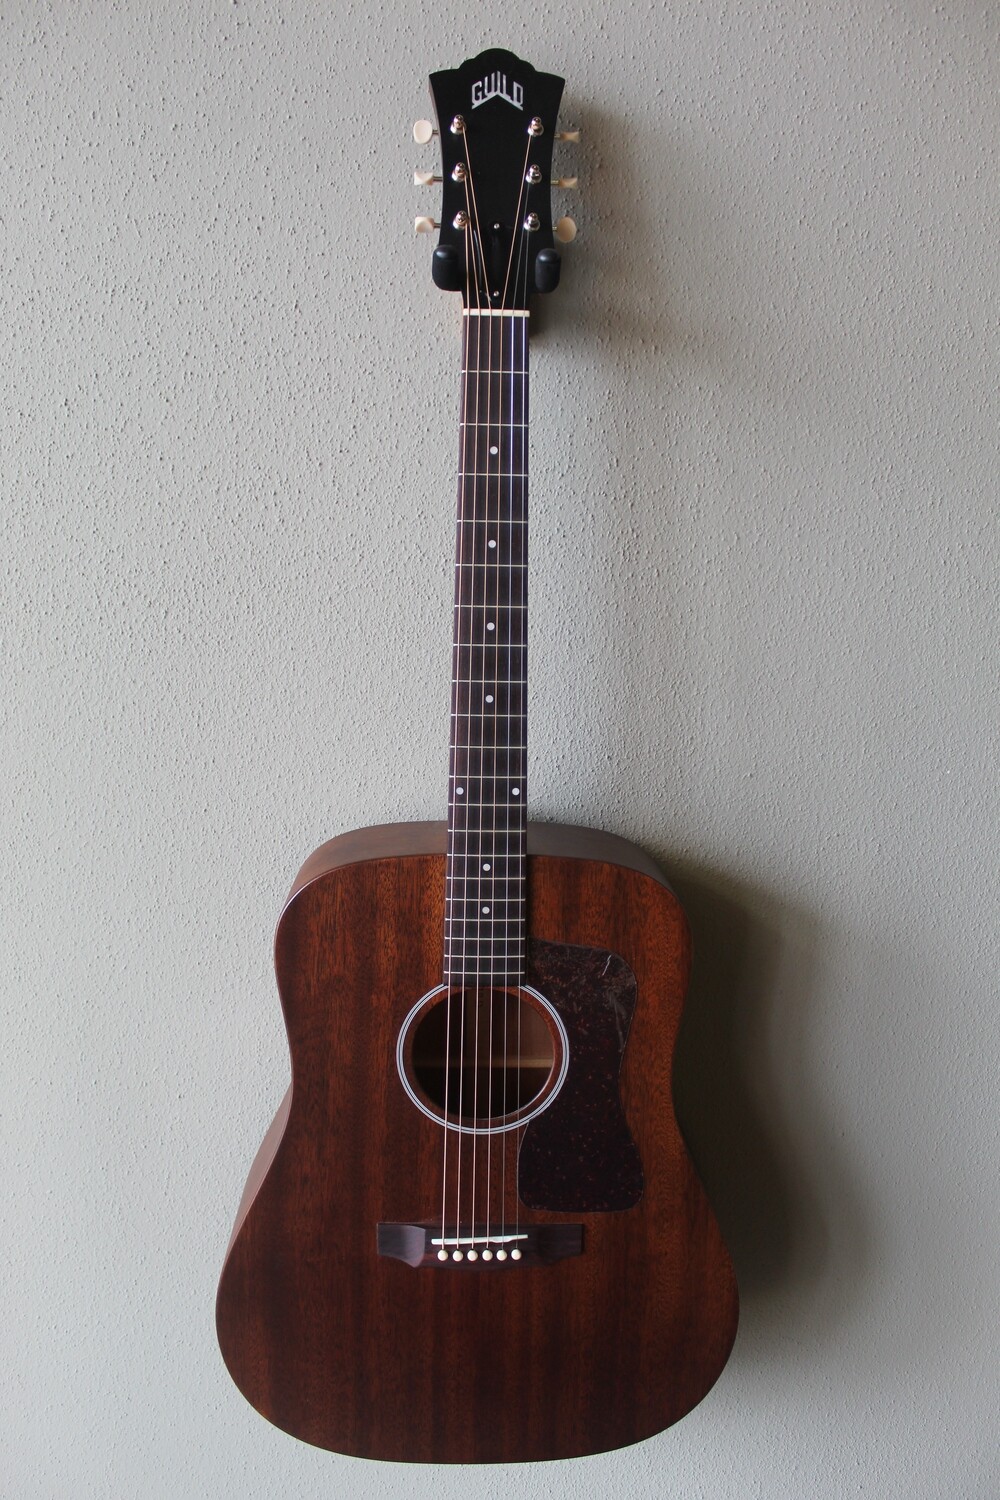 Guild D-20 Steel String Acoustic Guitar